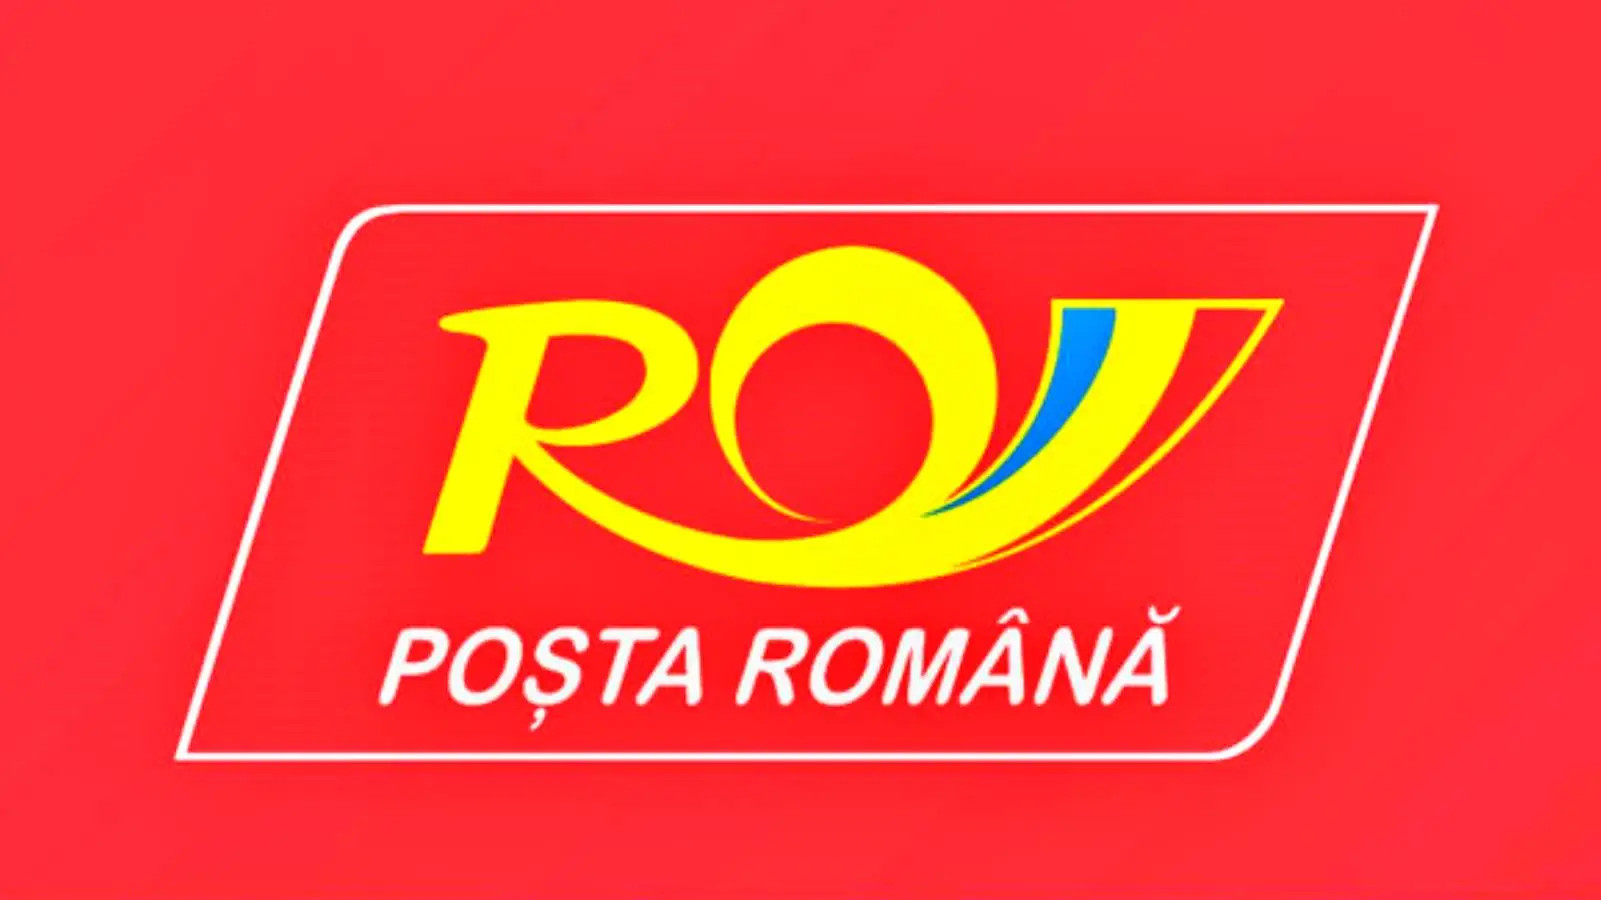 WICHTIGE Ankündigung Rumänisches Postmaß Luat Romani